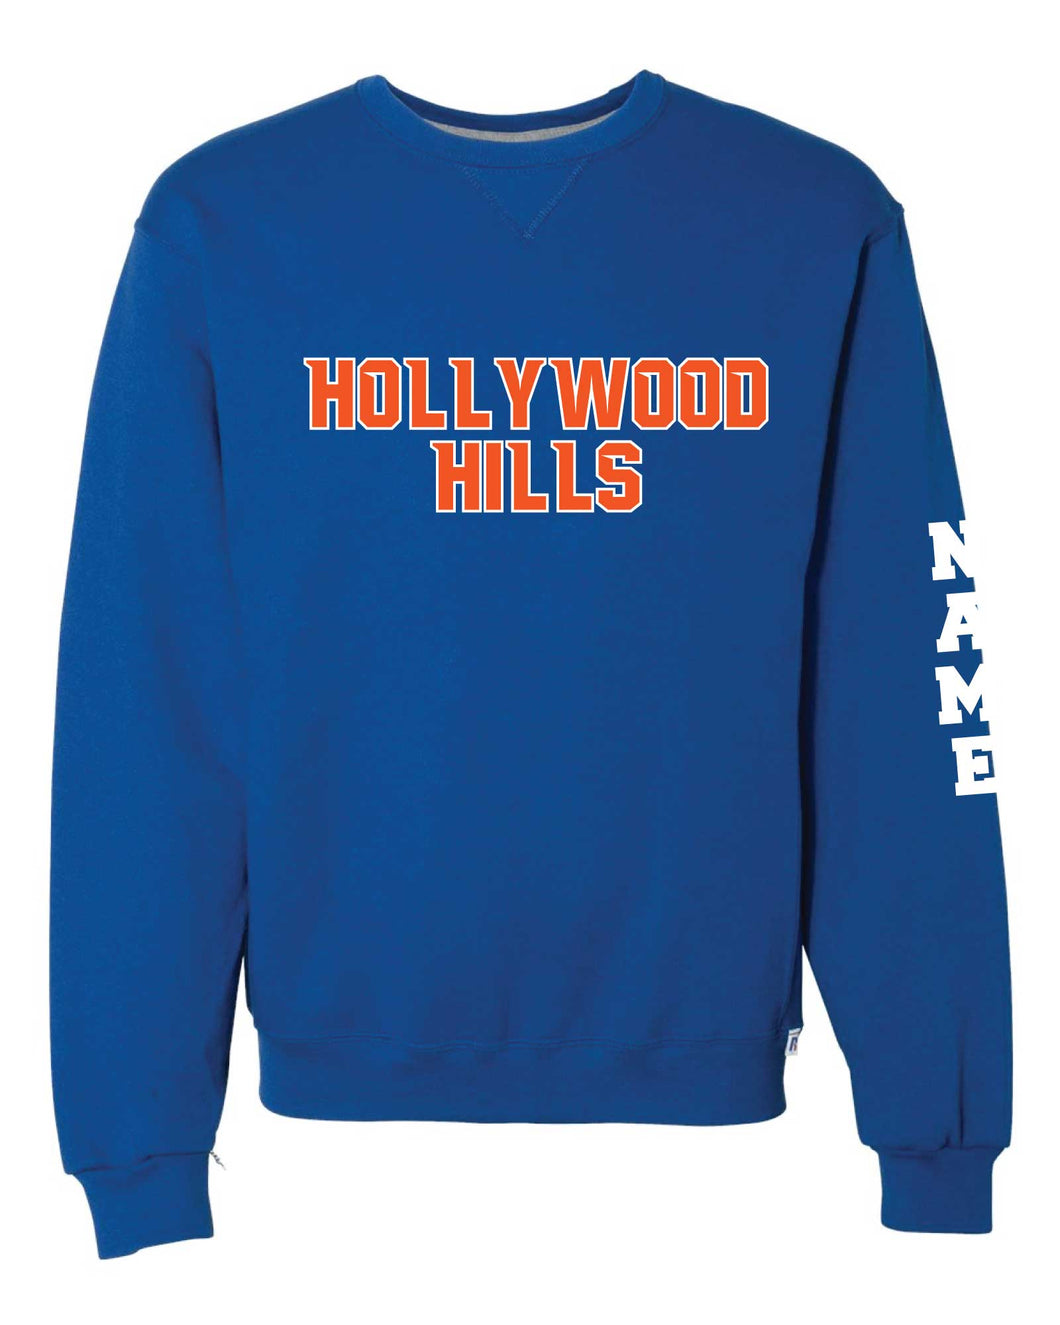 Hollywood Hills Wrestling Russell Athletic Cotton Crewneck Sweatshirt - Royal Blue